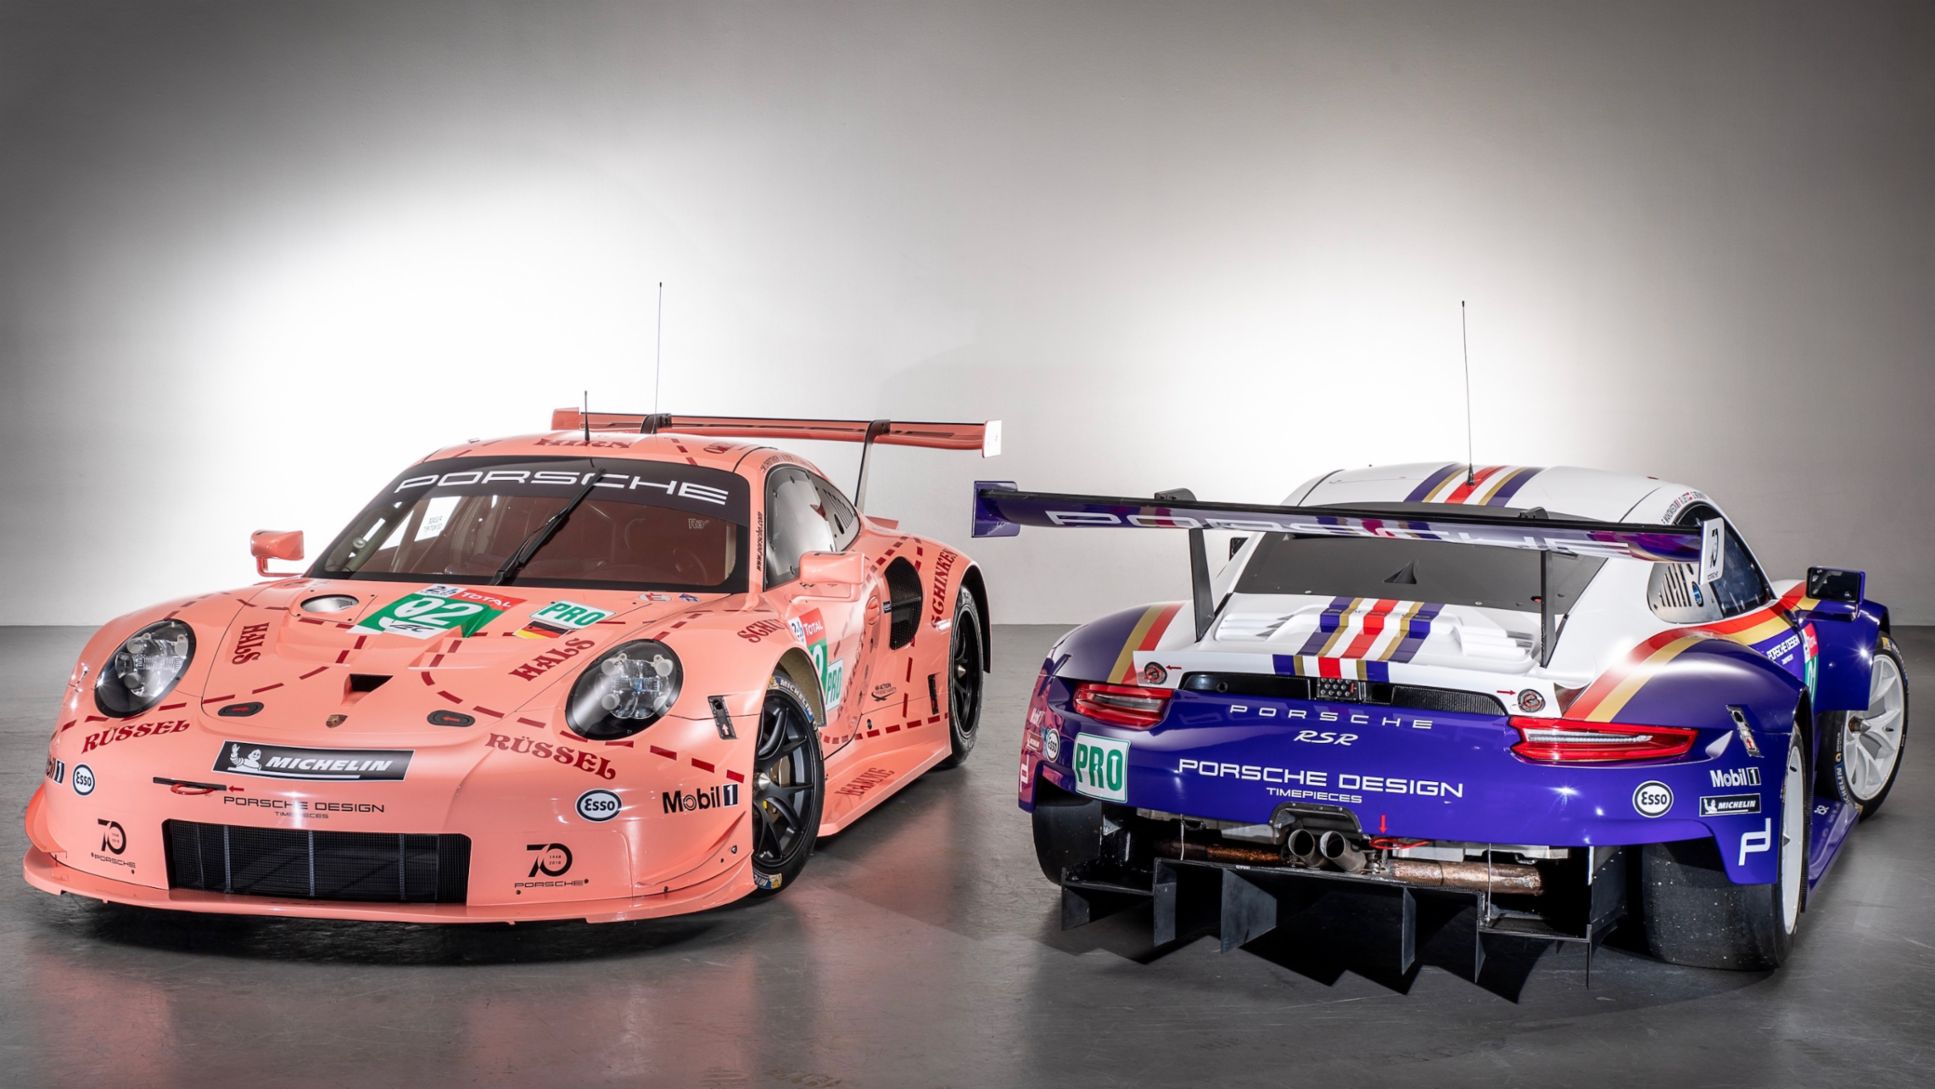 Two Porsche 911 RSR compete in historic livery - Porsche Newsroom